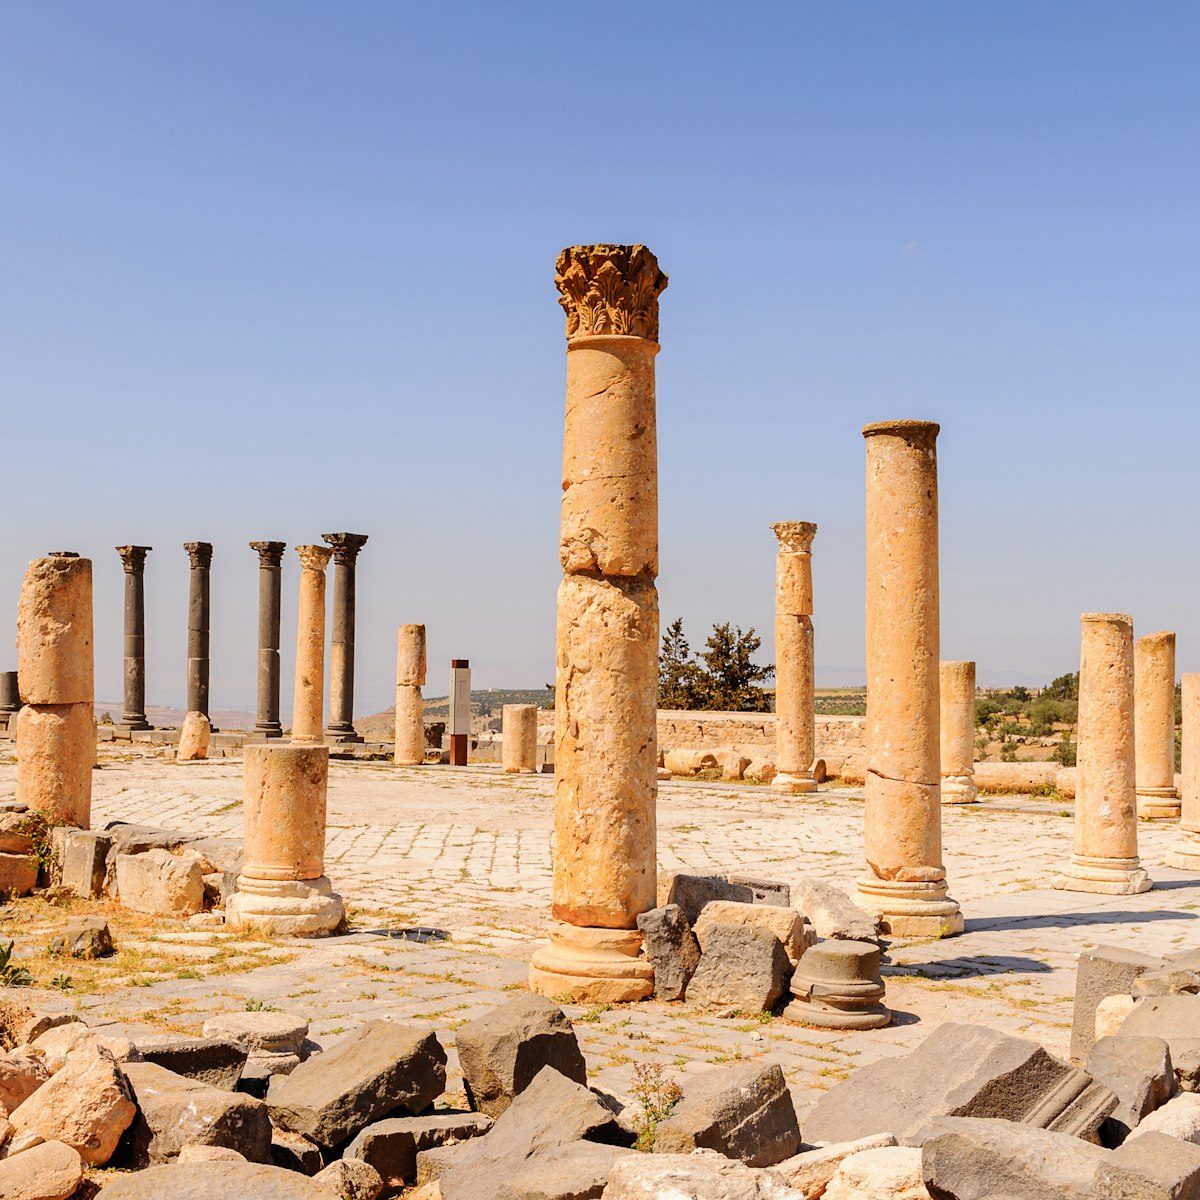 Roman columns of the ancient city of Gadara, modern Jordan.